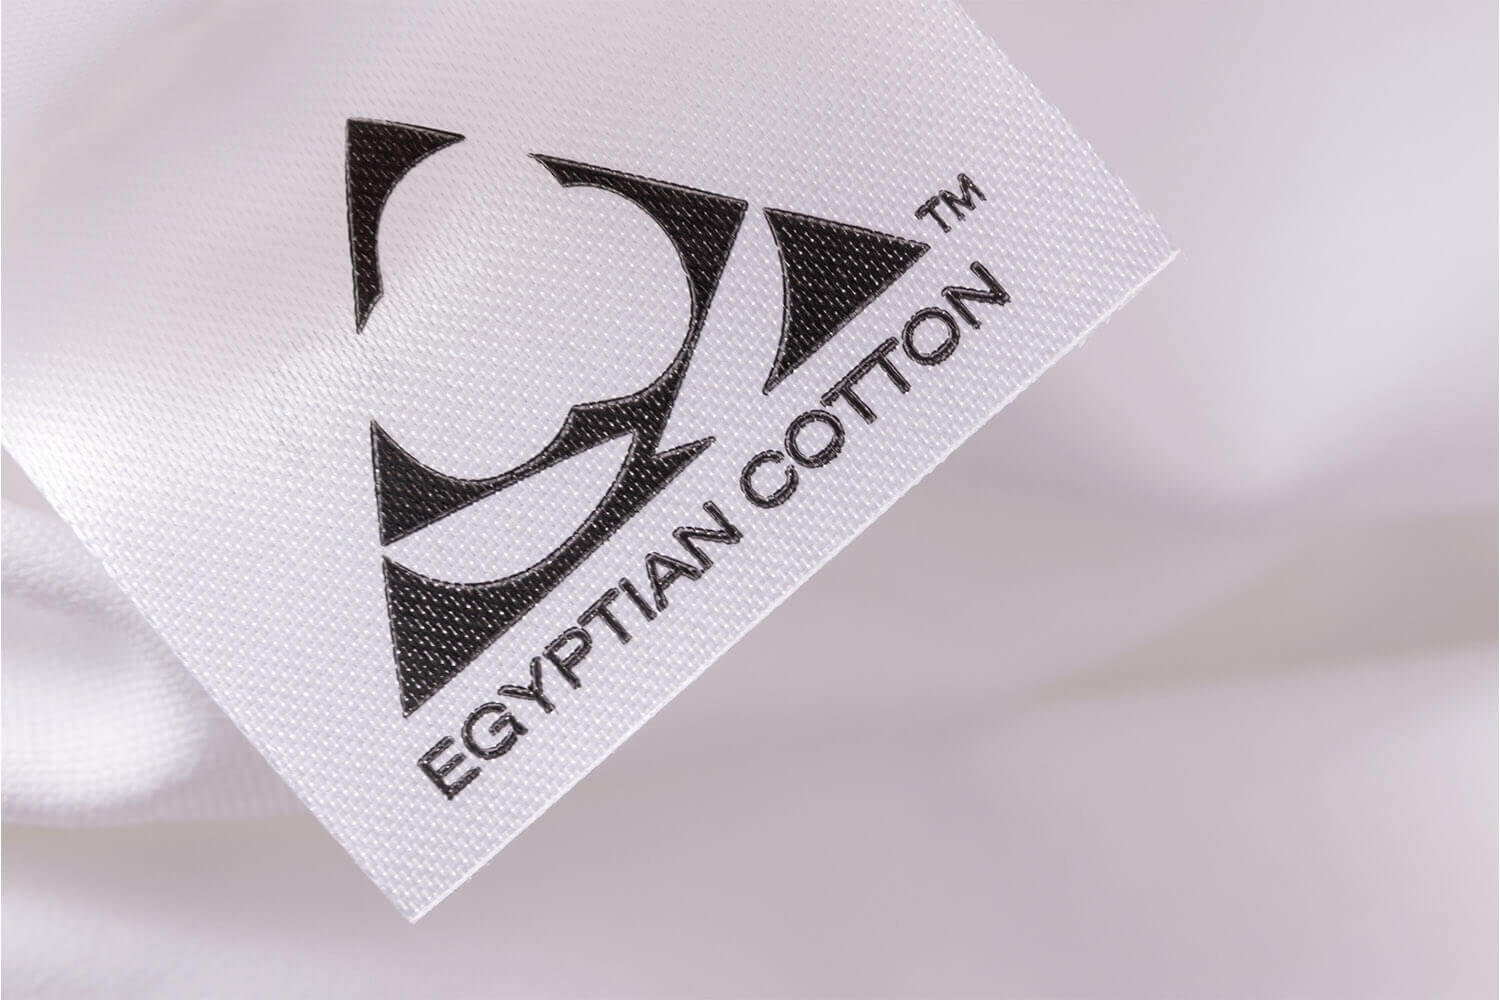 EGYPTIAN COTTON trademark tag on Logan & Cove Egyptian Cotton Sheets